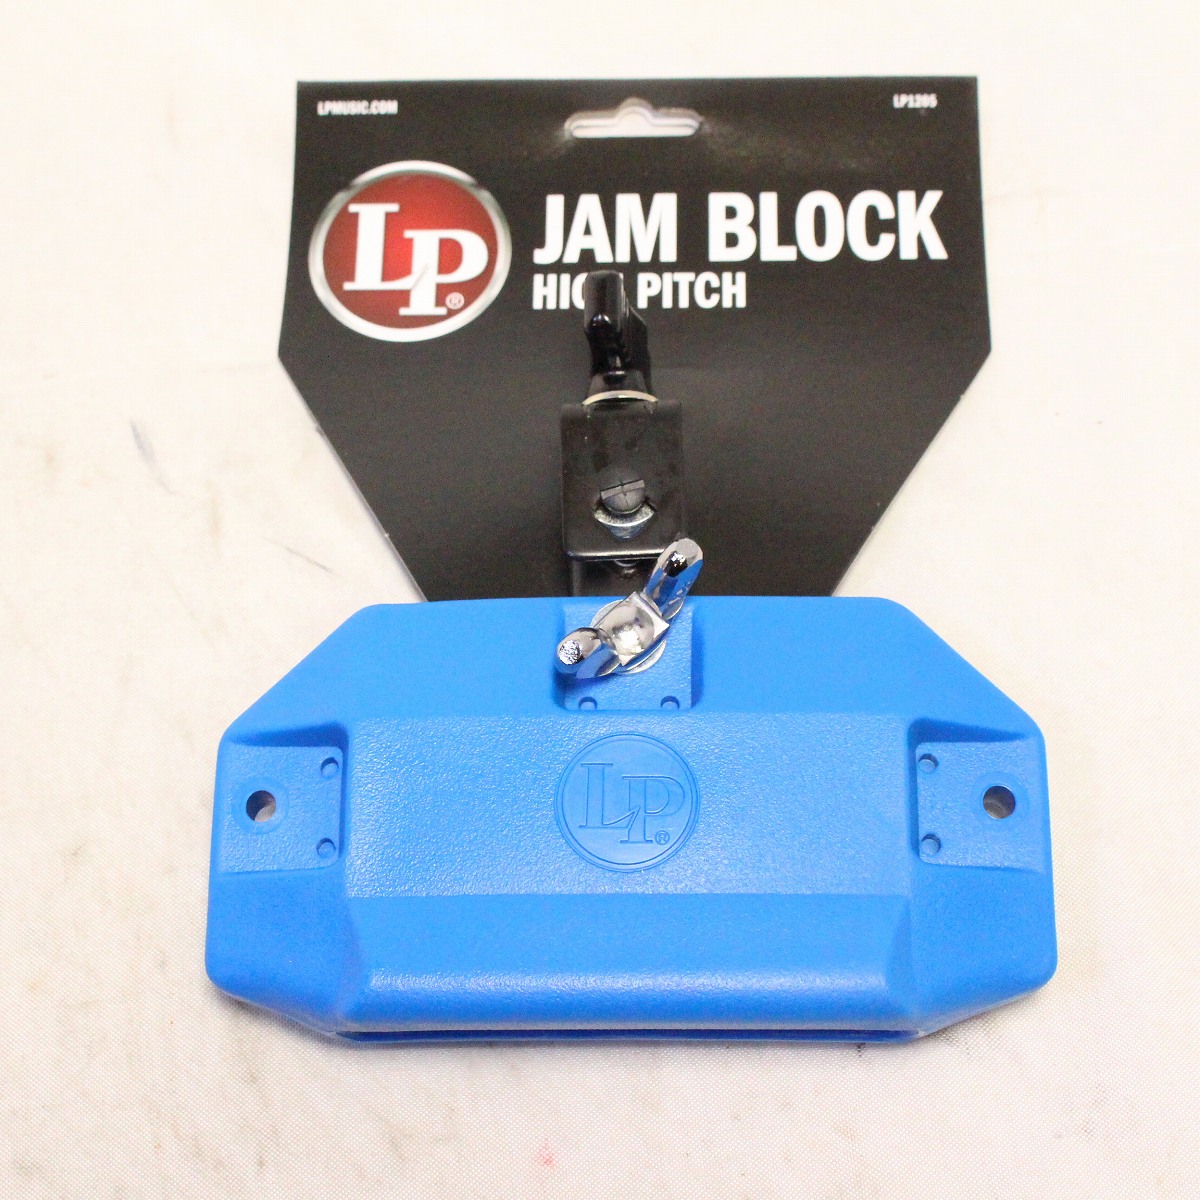 LP LP1205 Jam Block High Pitch エルピー ジャムブロック ハイピッチ イシバシ楽器